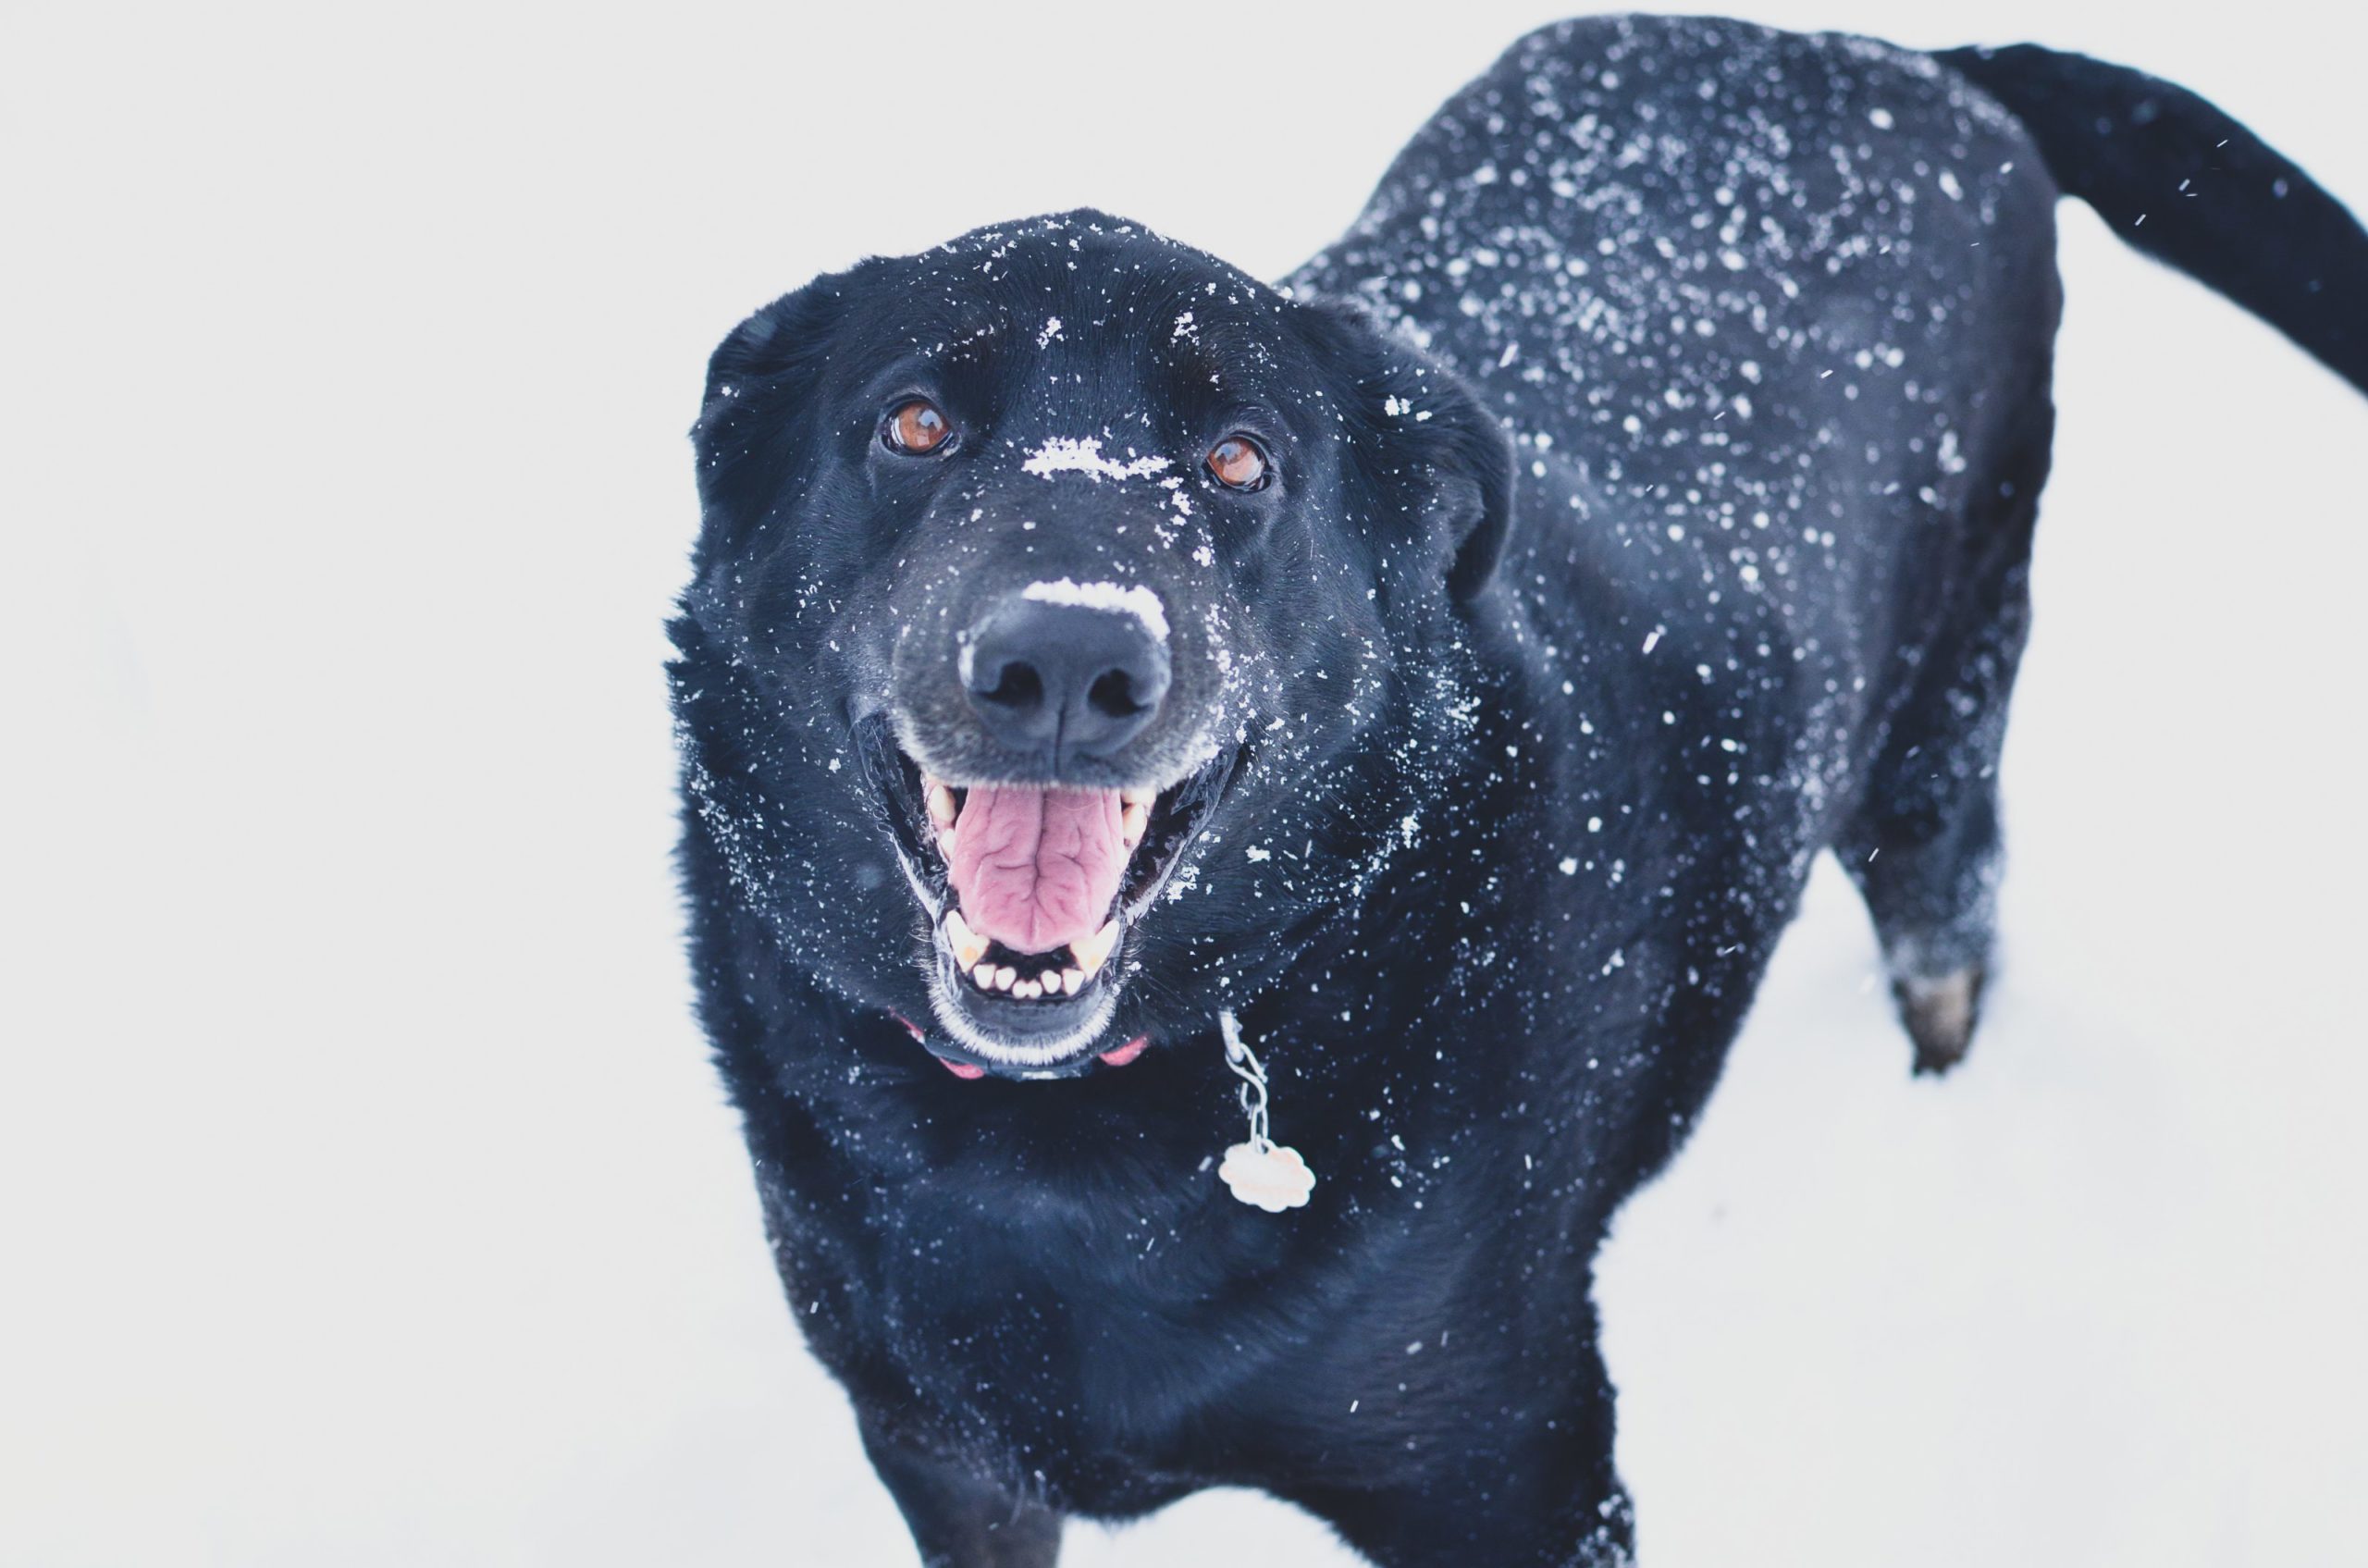 dog in snow | porta potty rentals vancouver salem portland oregon